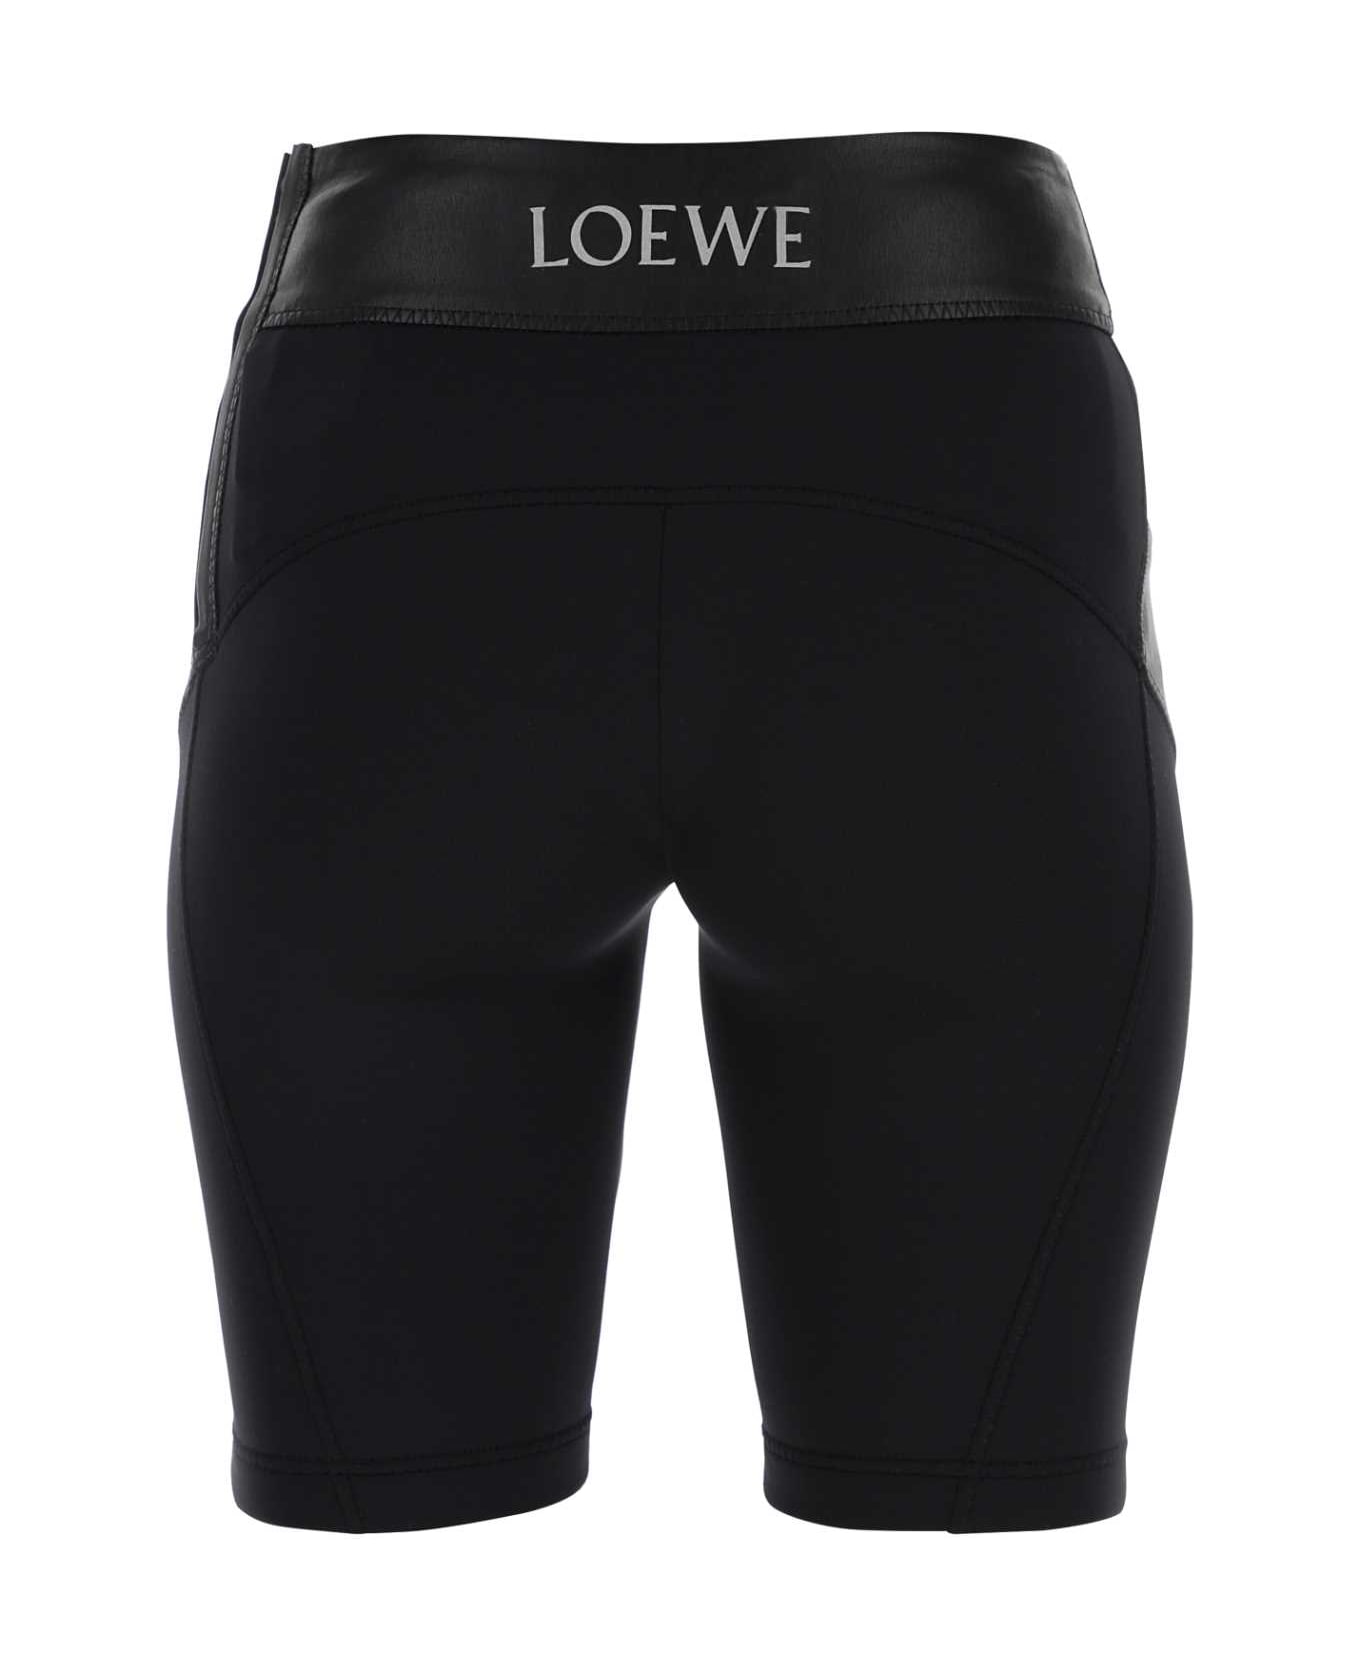 Loewe Black Leather And Fabric Leggings - BLACK